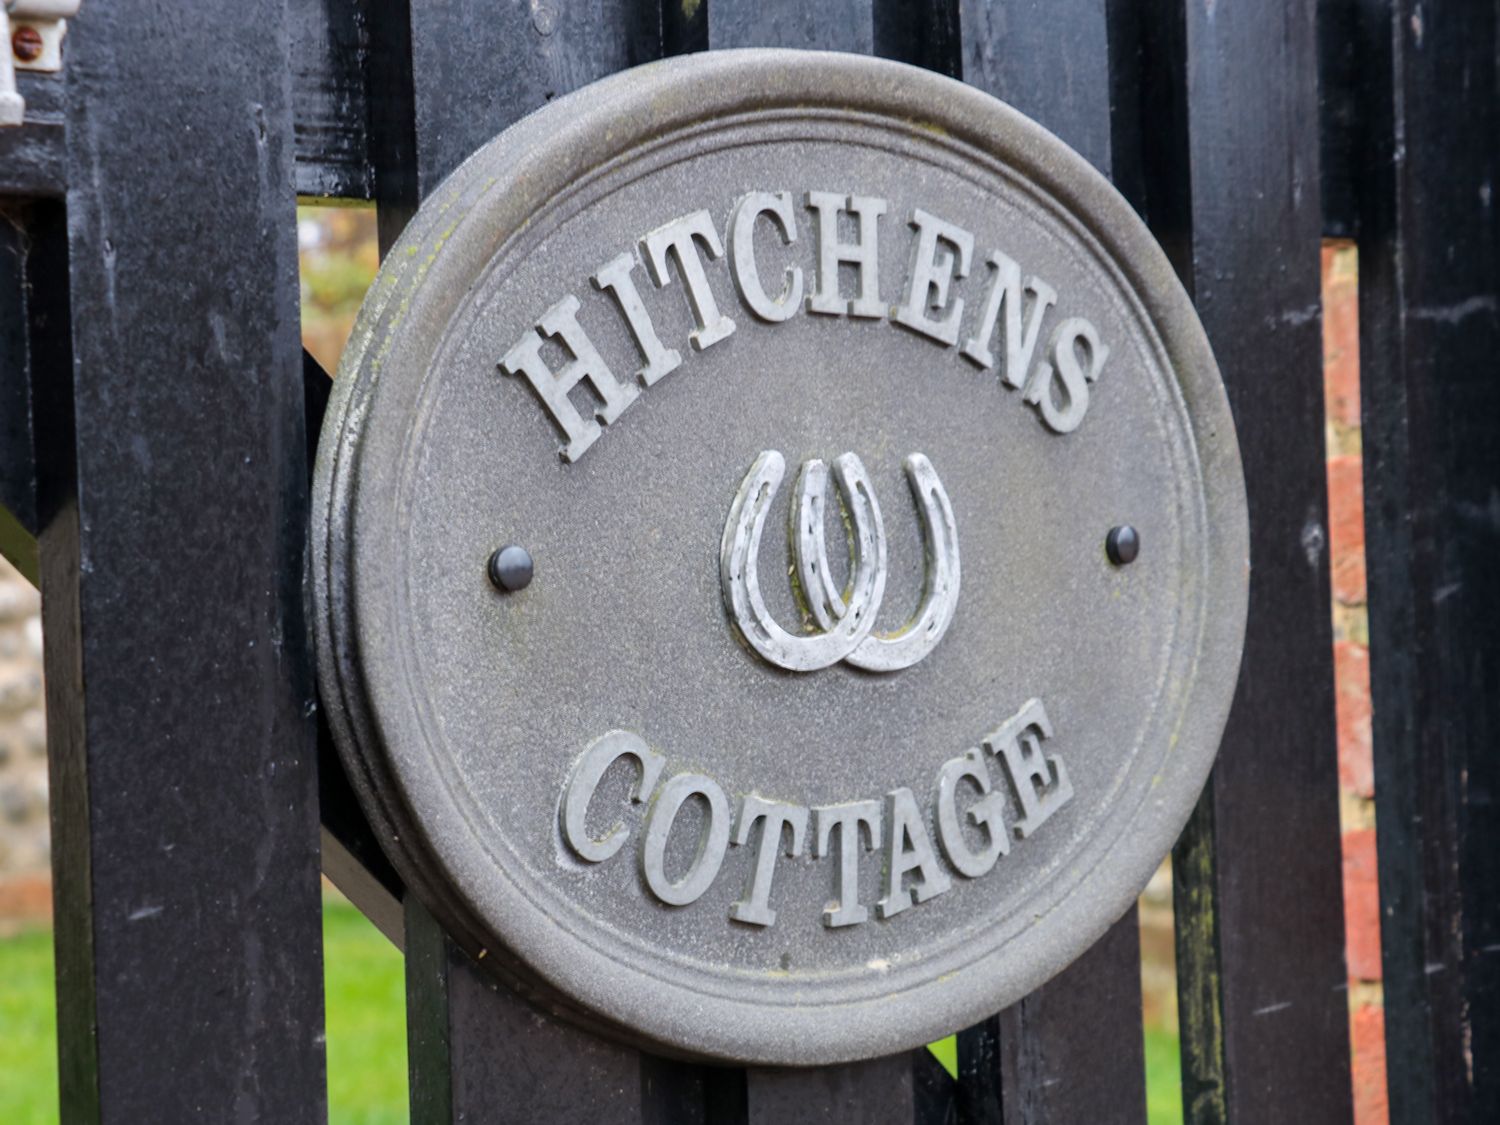 Hitchens Cottage, East Anglia